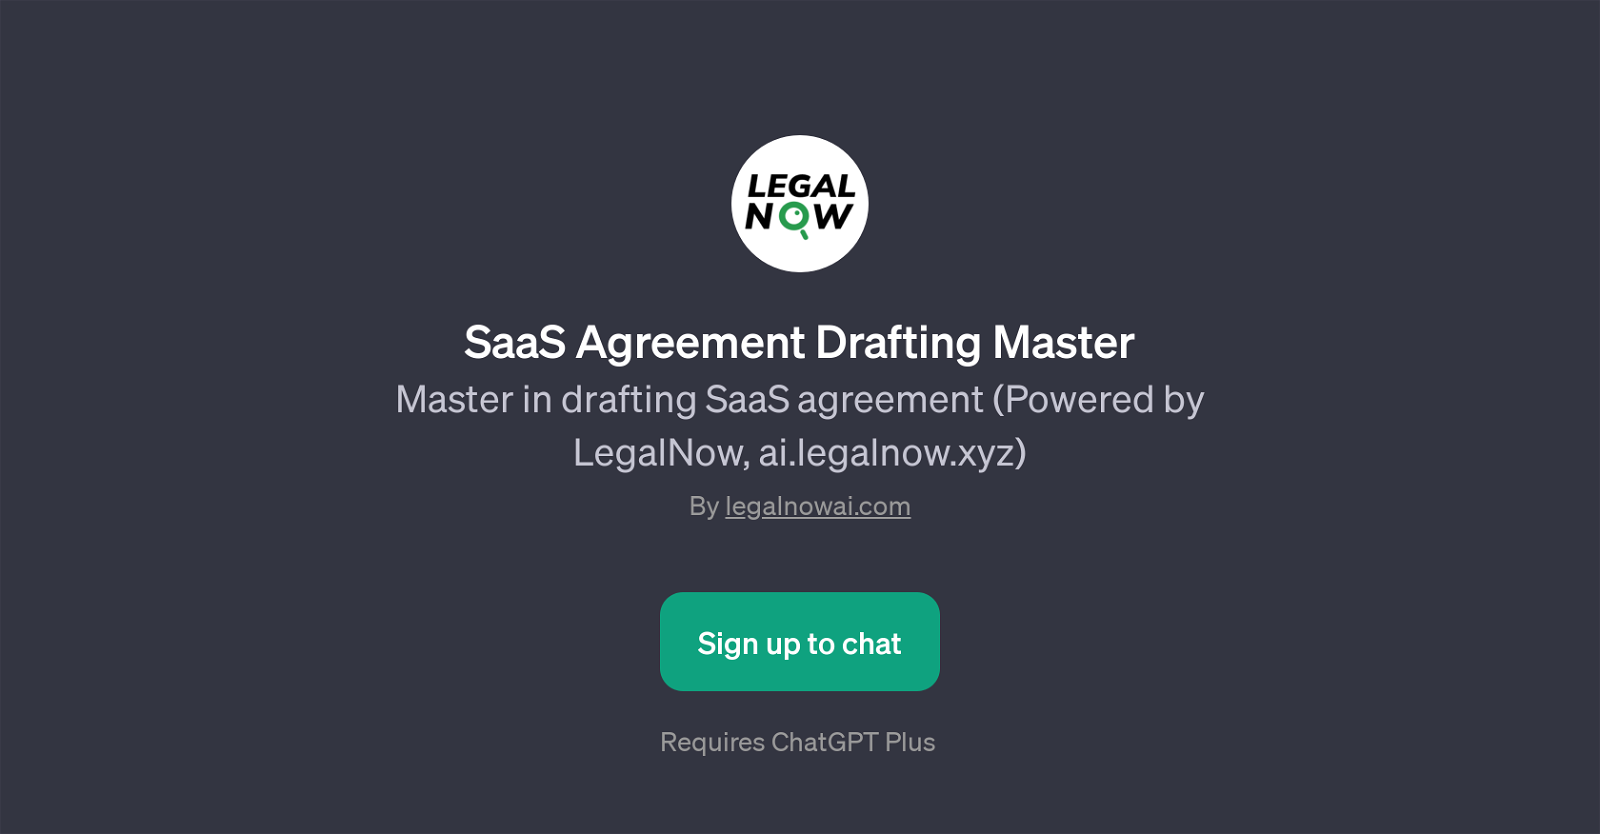 SaaS Agreement Drafting Master website